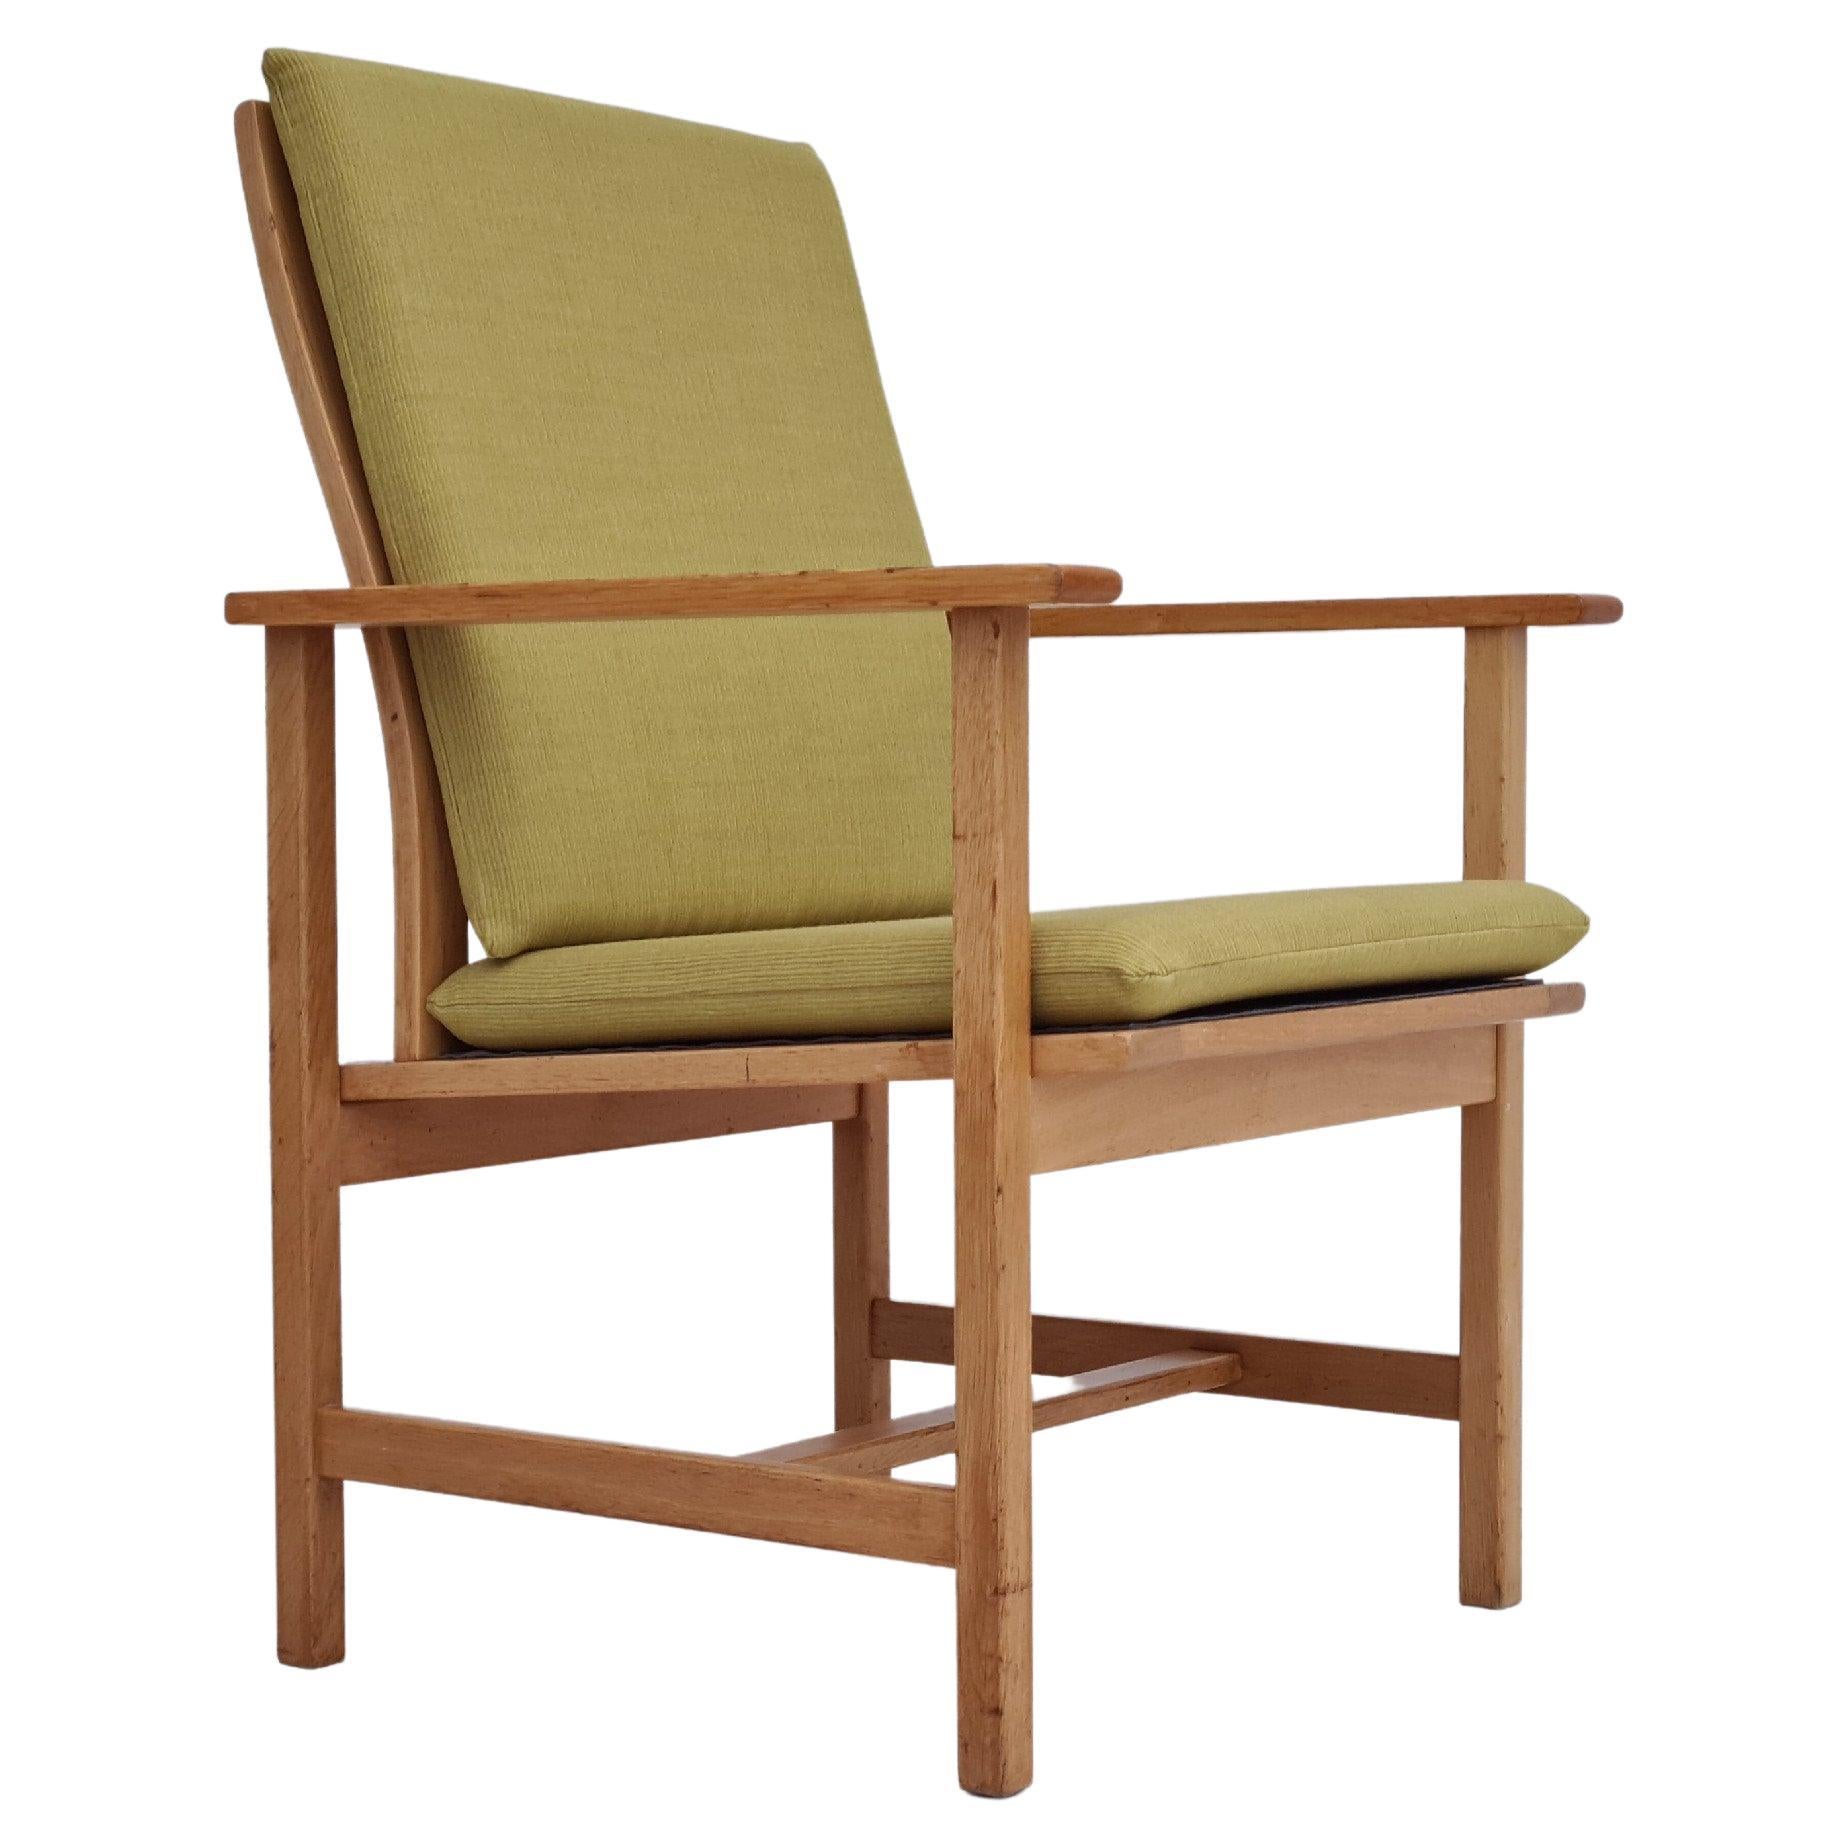 80s, Danish design by Børge Mogensen, completely reupholstered armchair